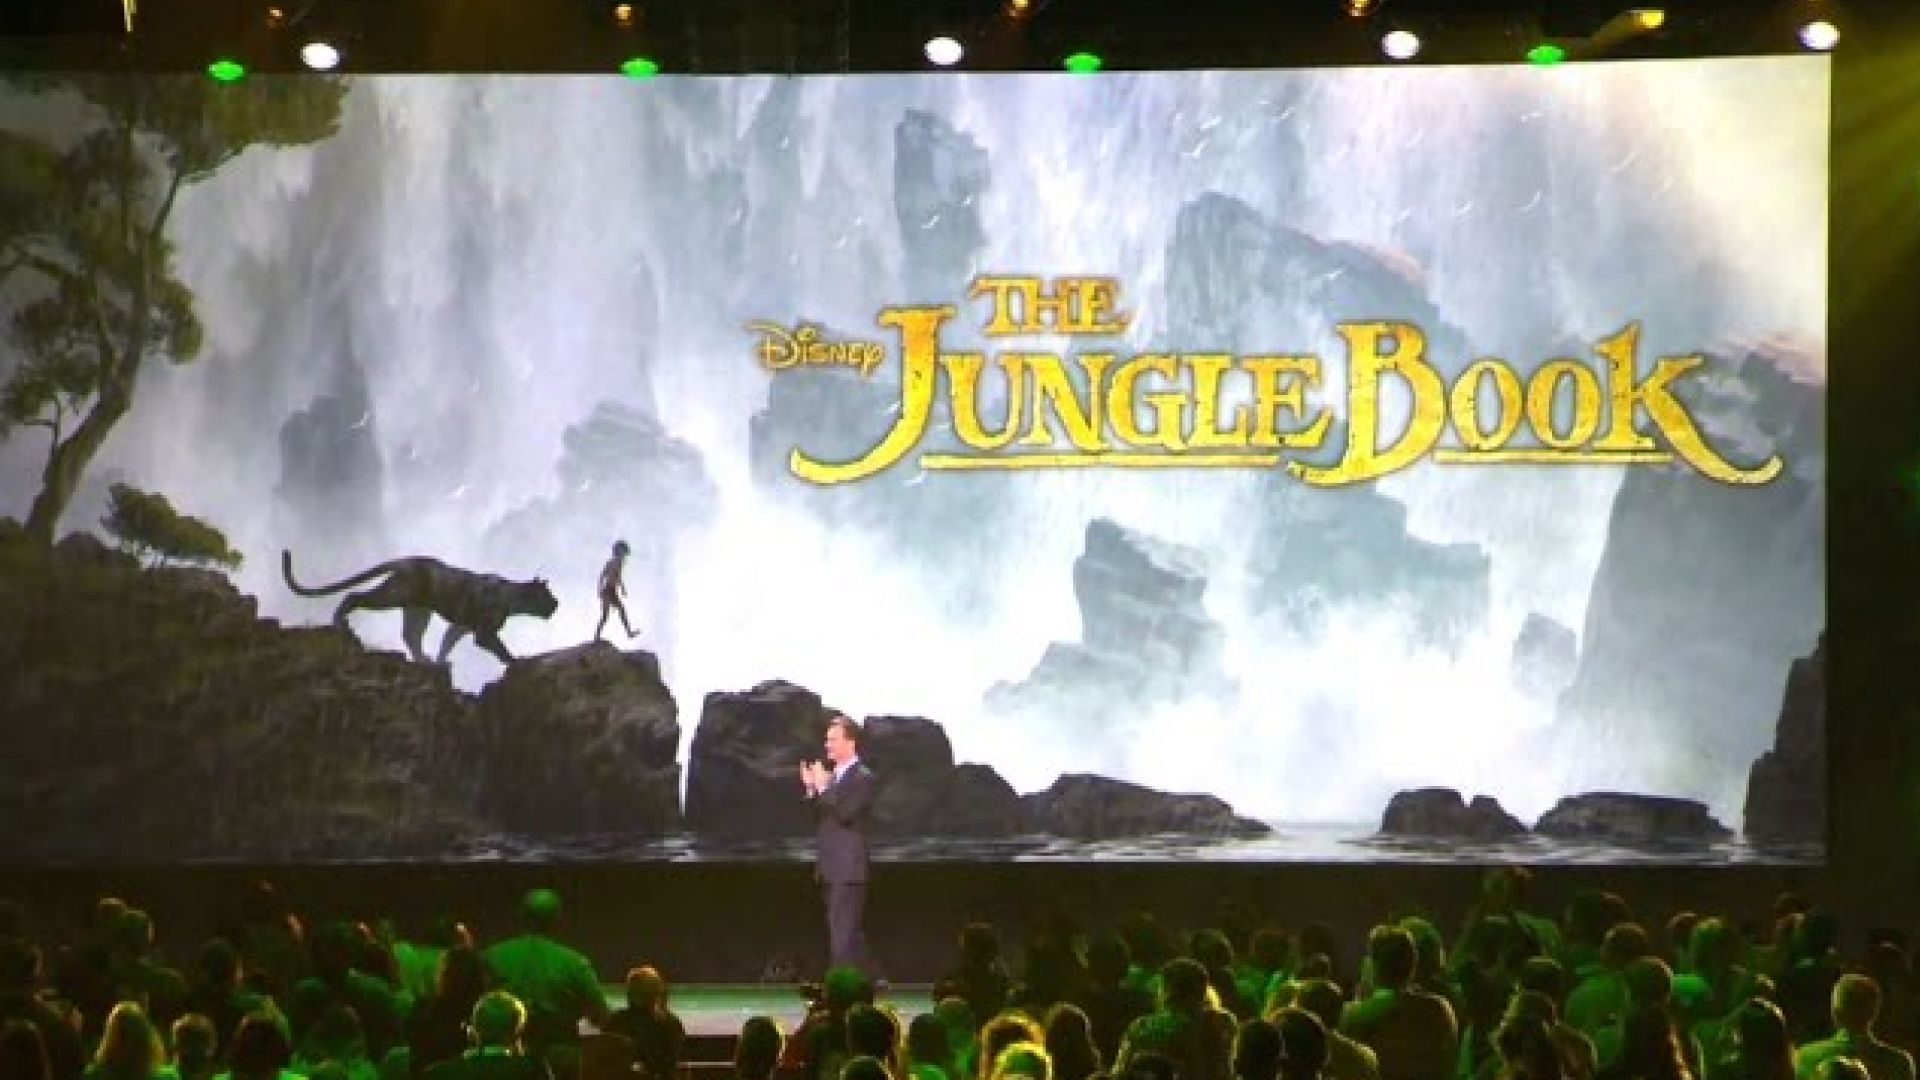 Disney's D23 'The Jungle Book' Presentation with Jon Favreau